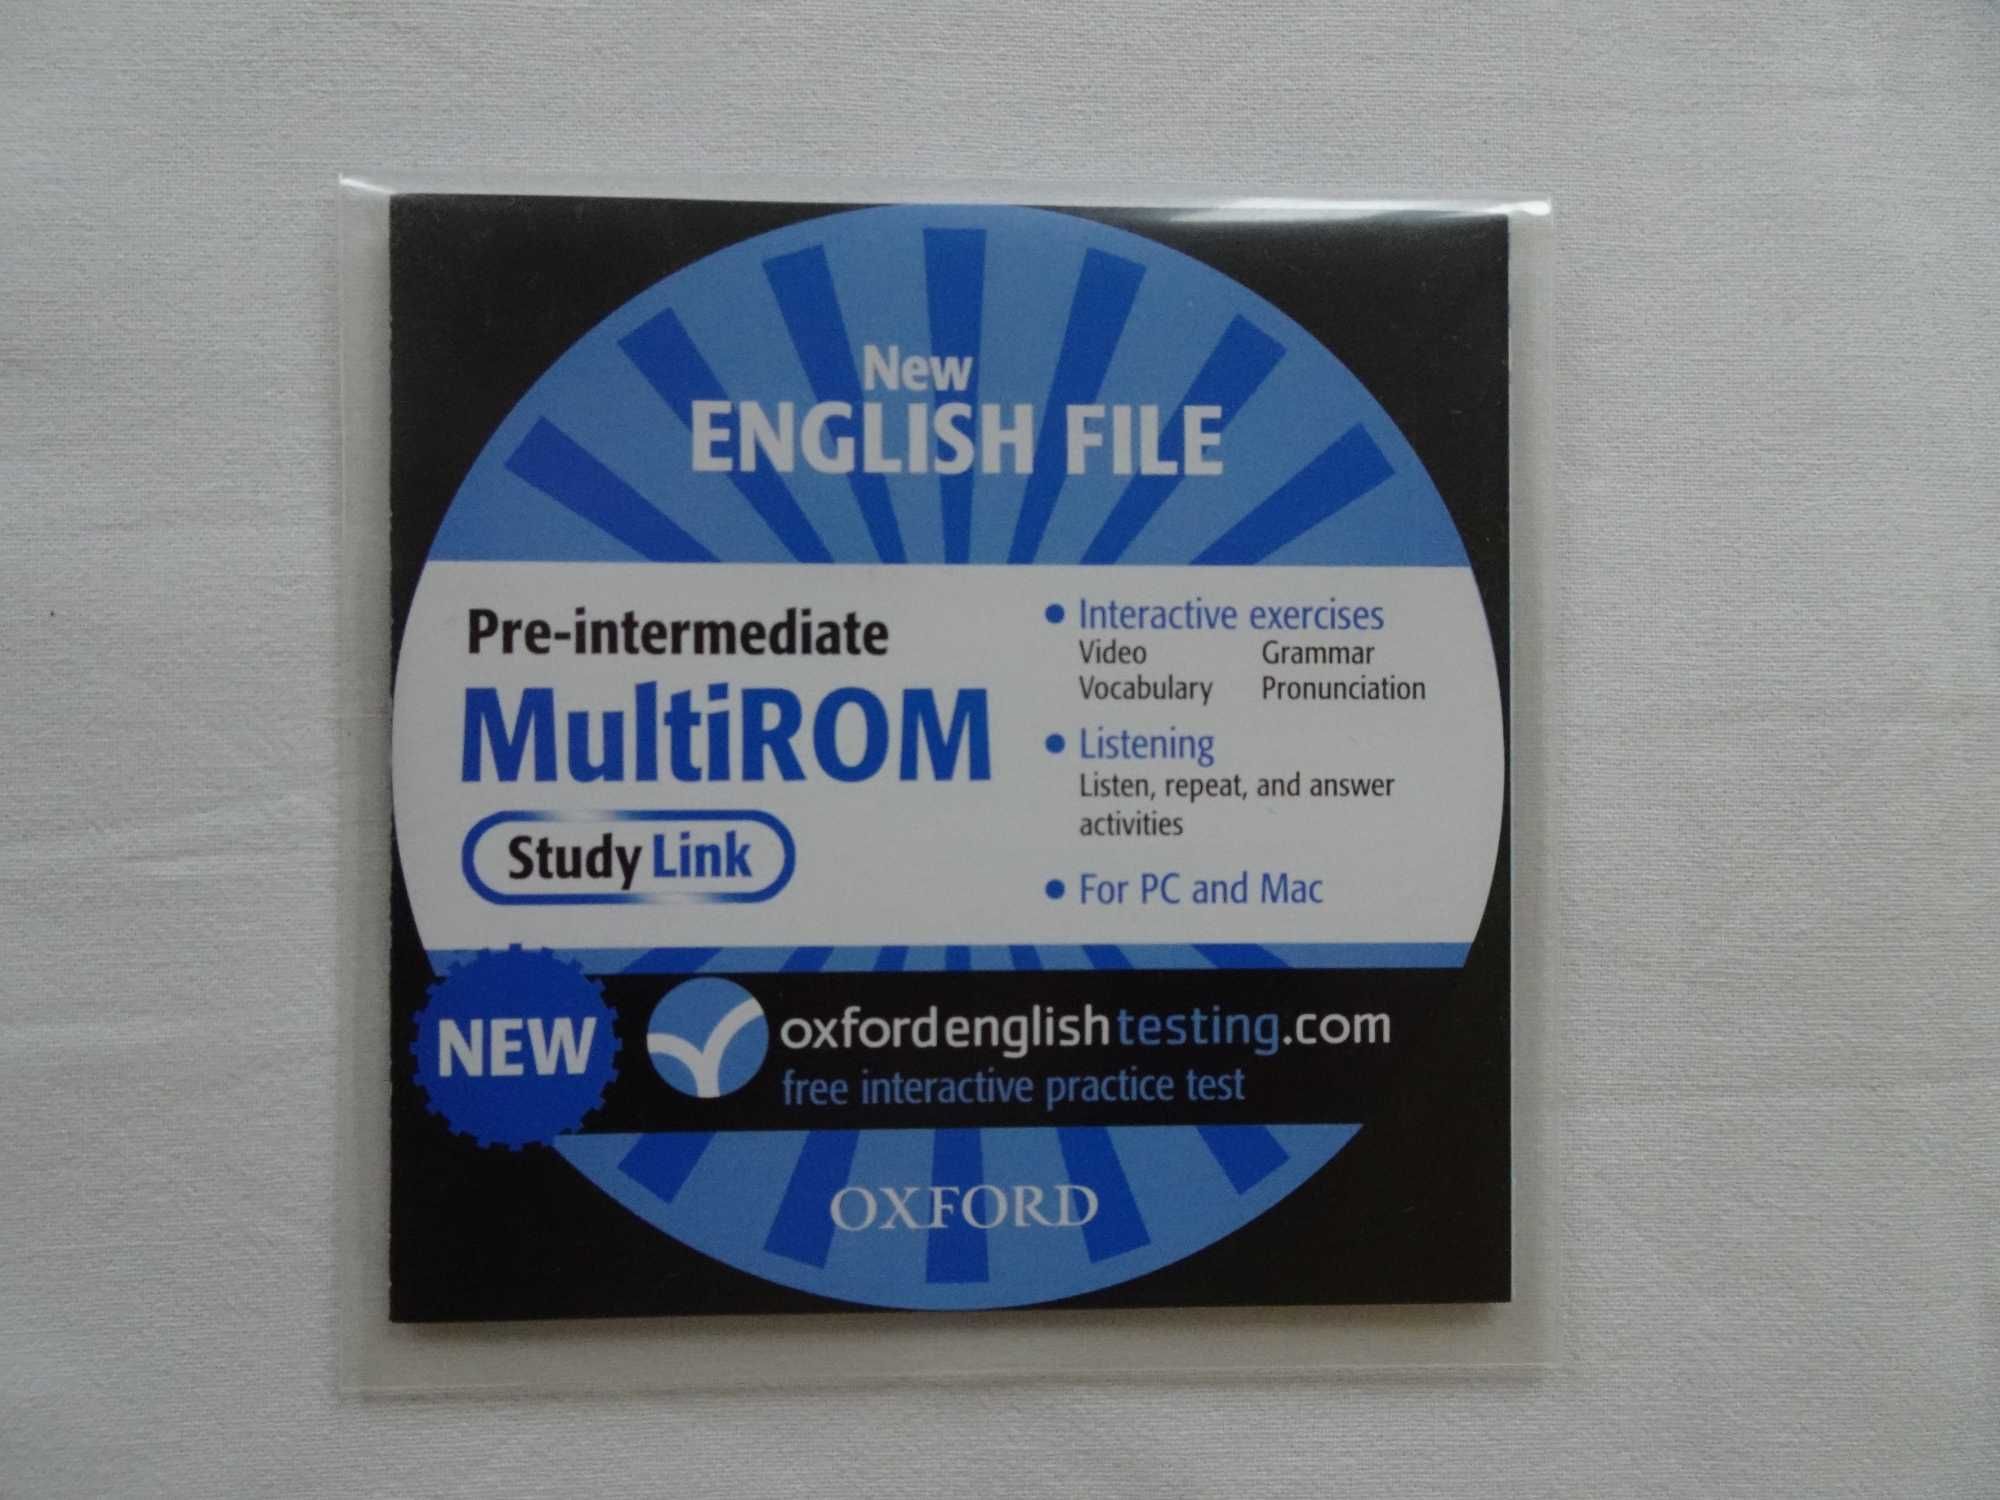 New English File pre-intermediate MultiROM CD Oxford angielski